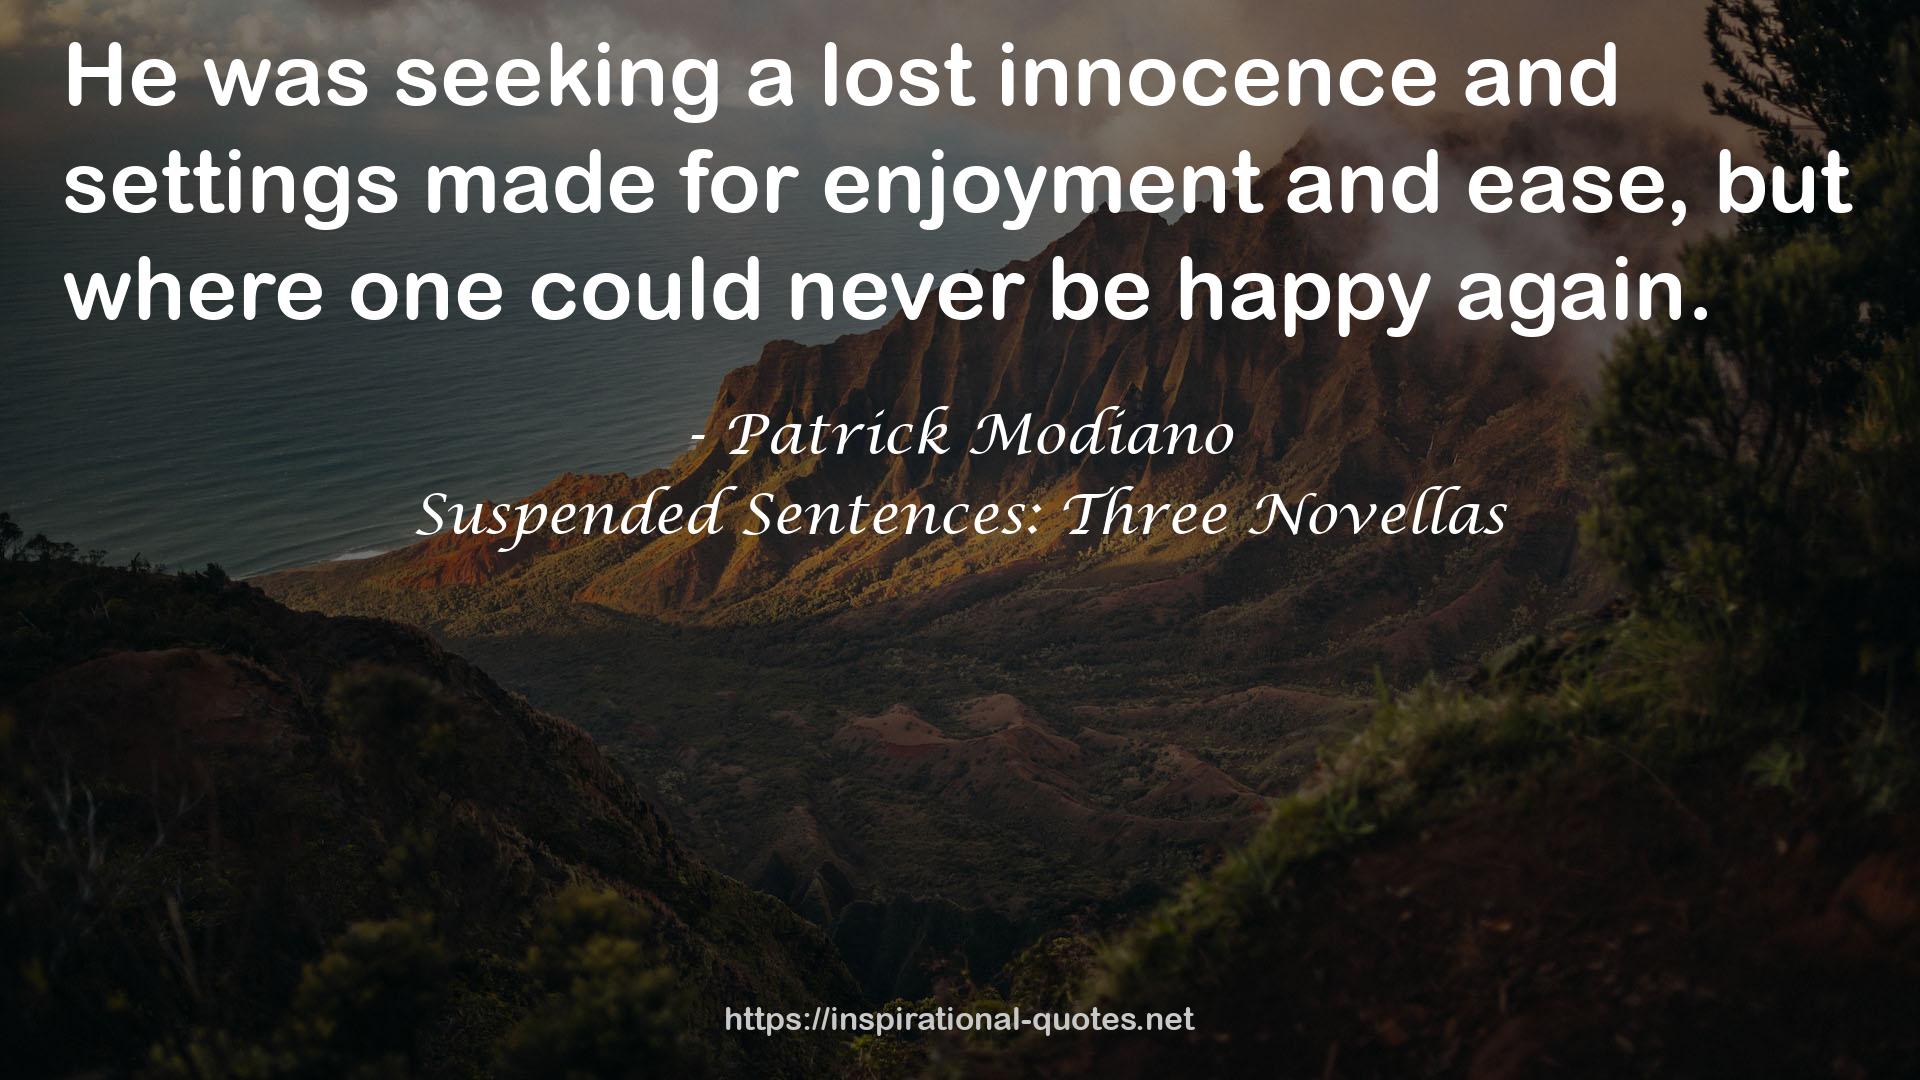 Suspended Sentences: Three Novellas QUOTES